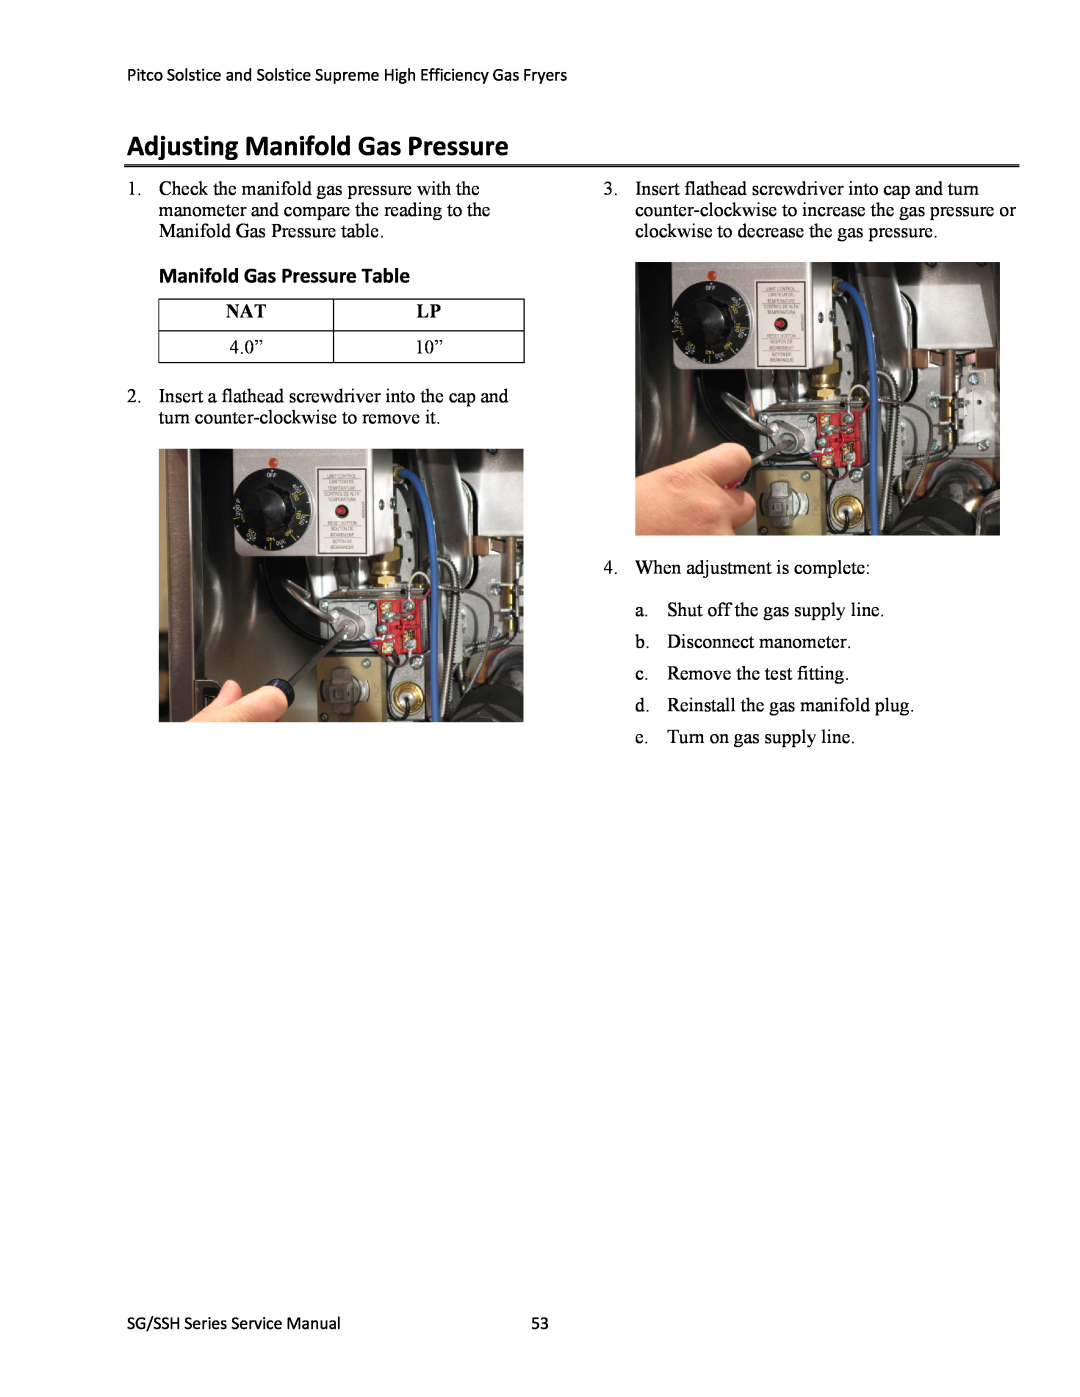 Pitco Frialator L22-345 manual Adjusting Manifold Gas Pressure, Manifold Gas Pressure Table, When adjustment is complete 